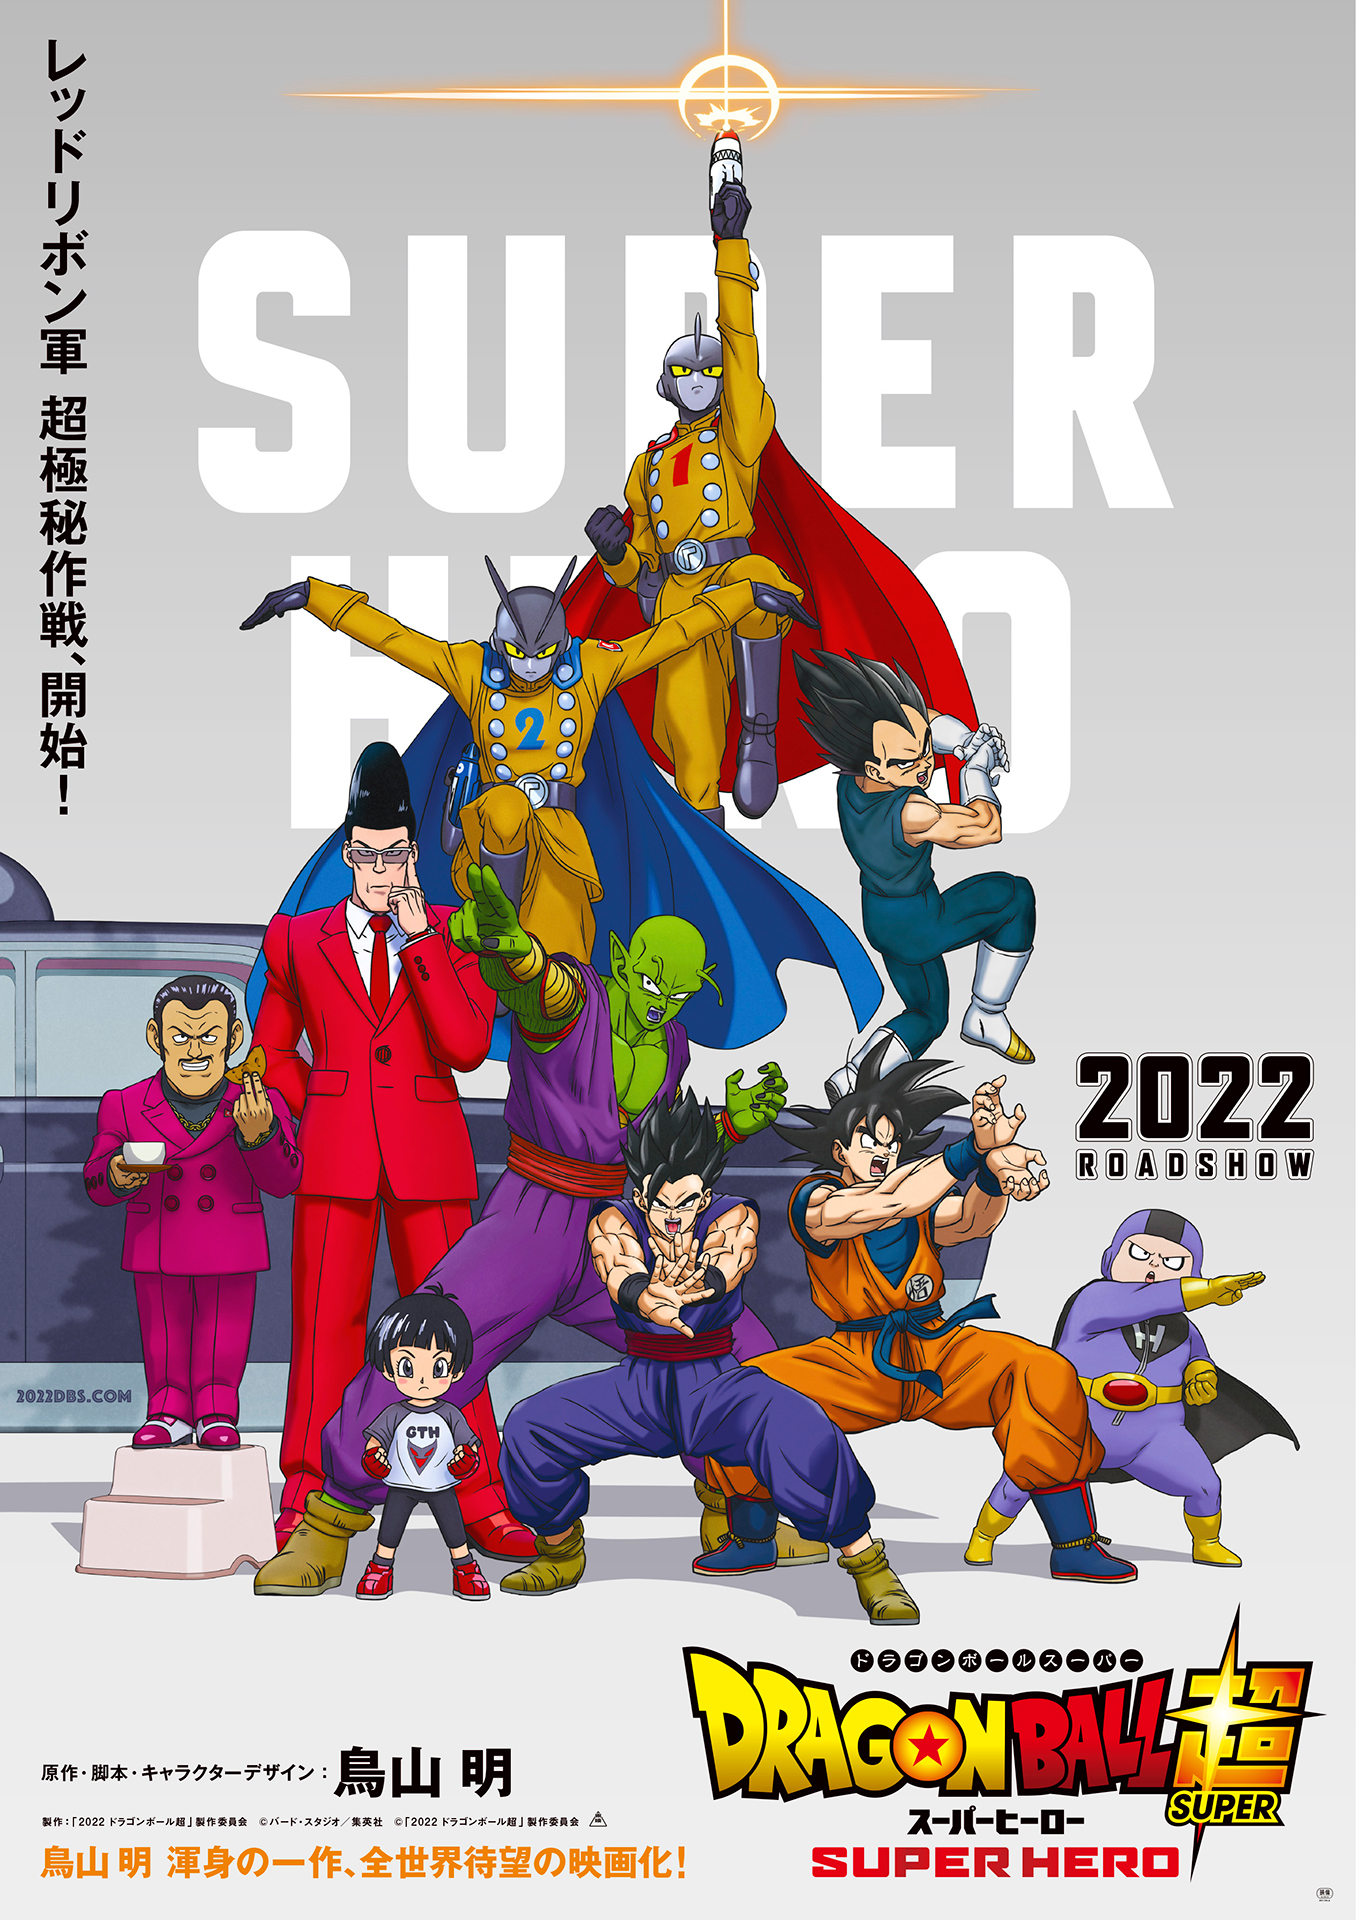 Dragon Ball Super: Super Hero Visual Key